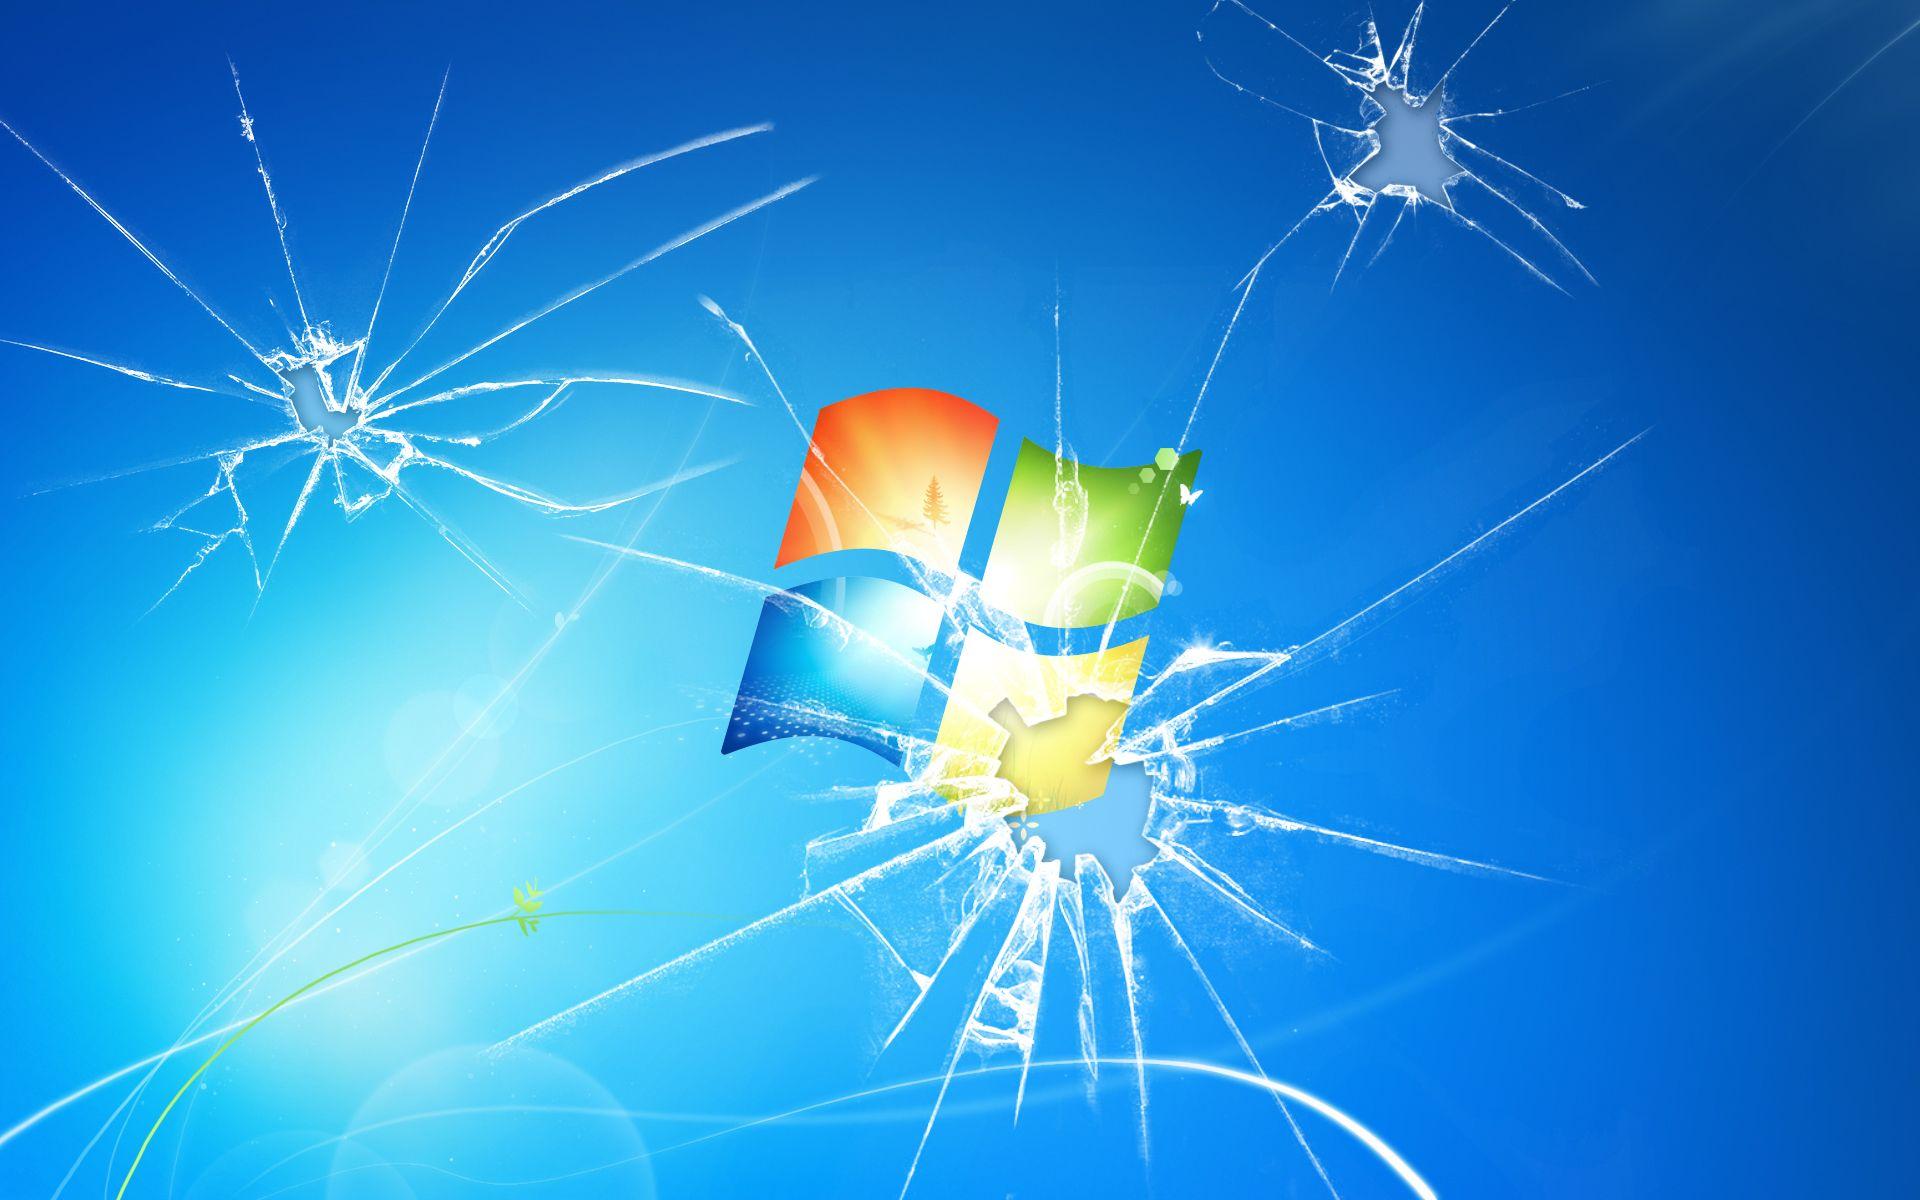 10254) Windows 7 Broken Screen Wallpaper